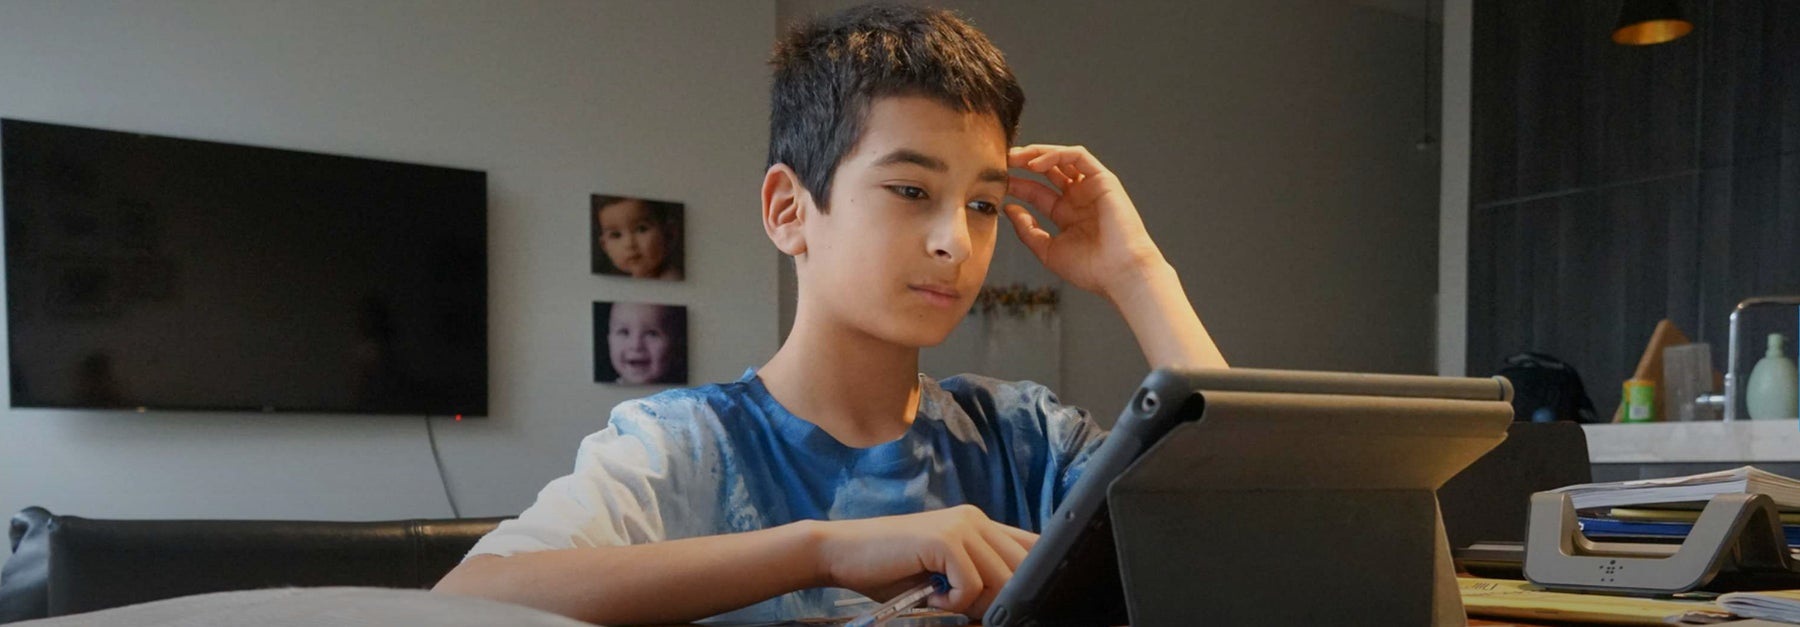 A boy looking at a computer screen